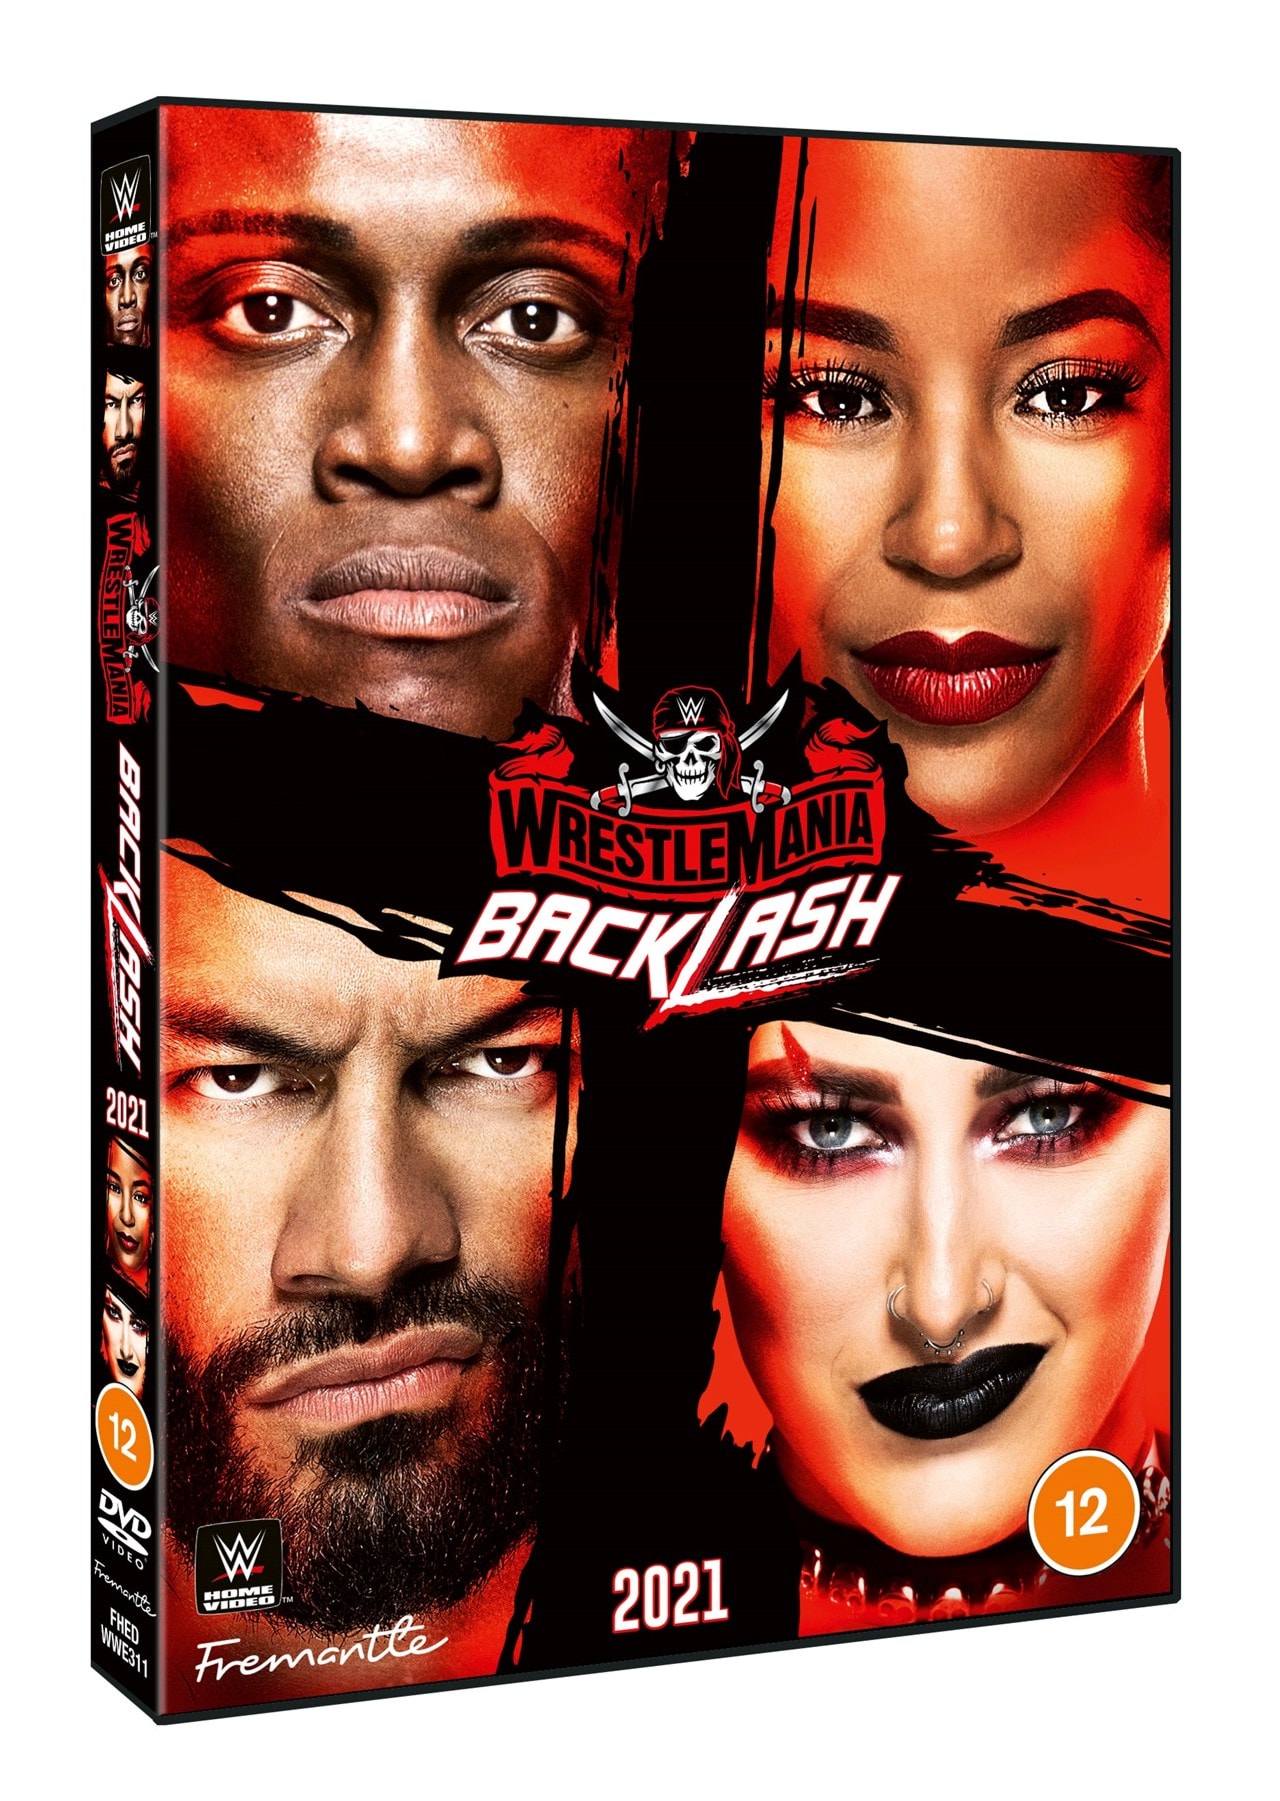 WWE Wrestlemania Backlash 2021 DVD Free shipping over £20 HMV Store